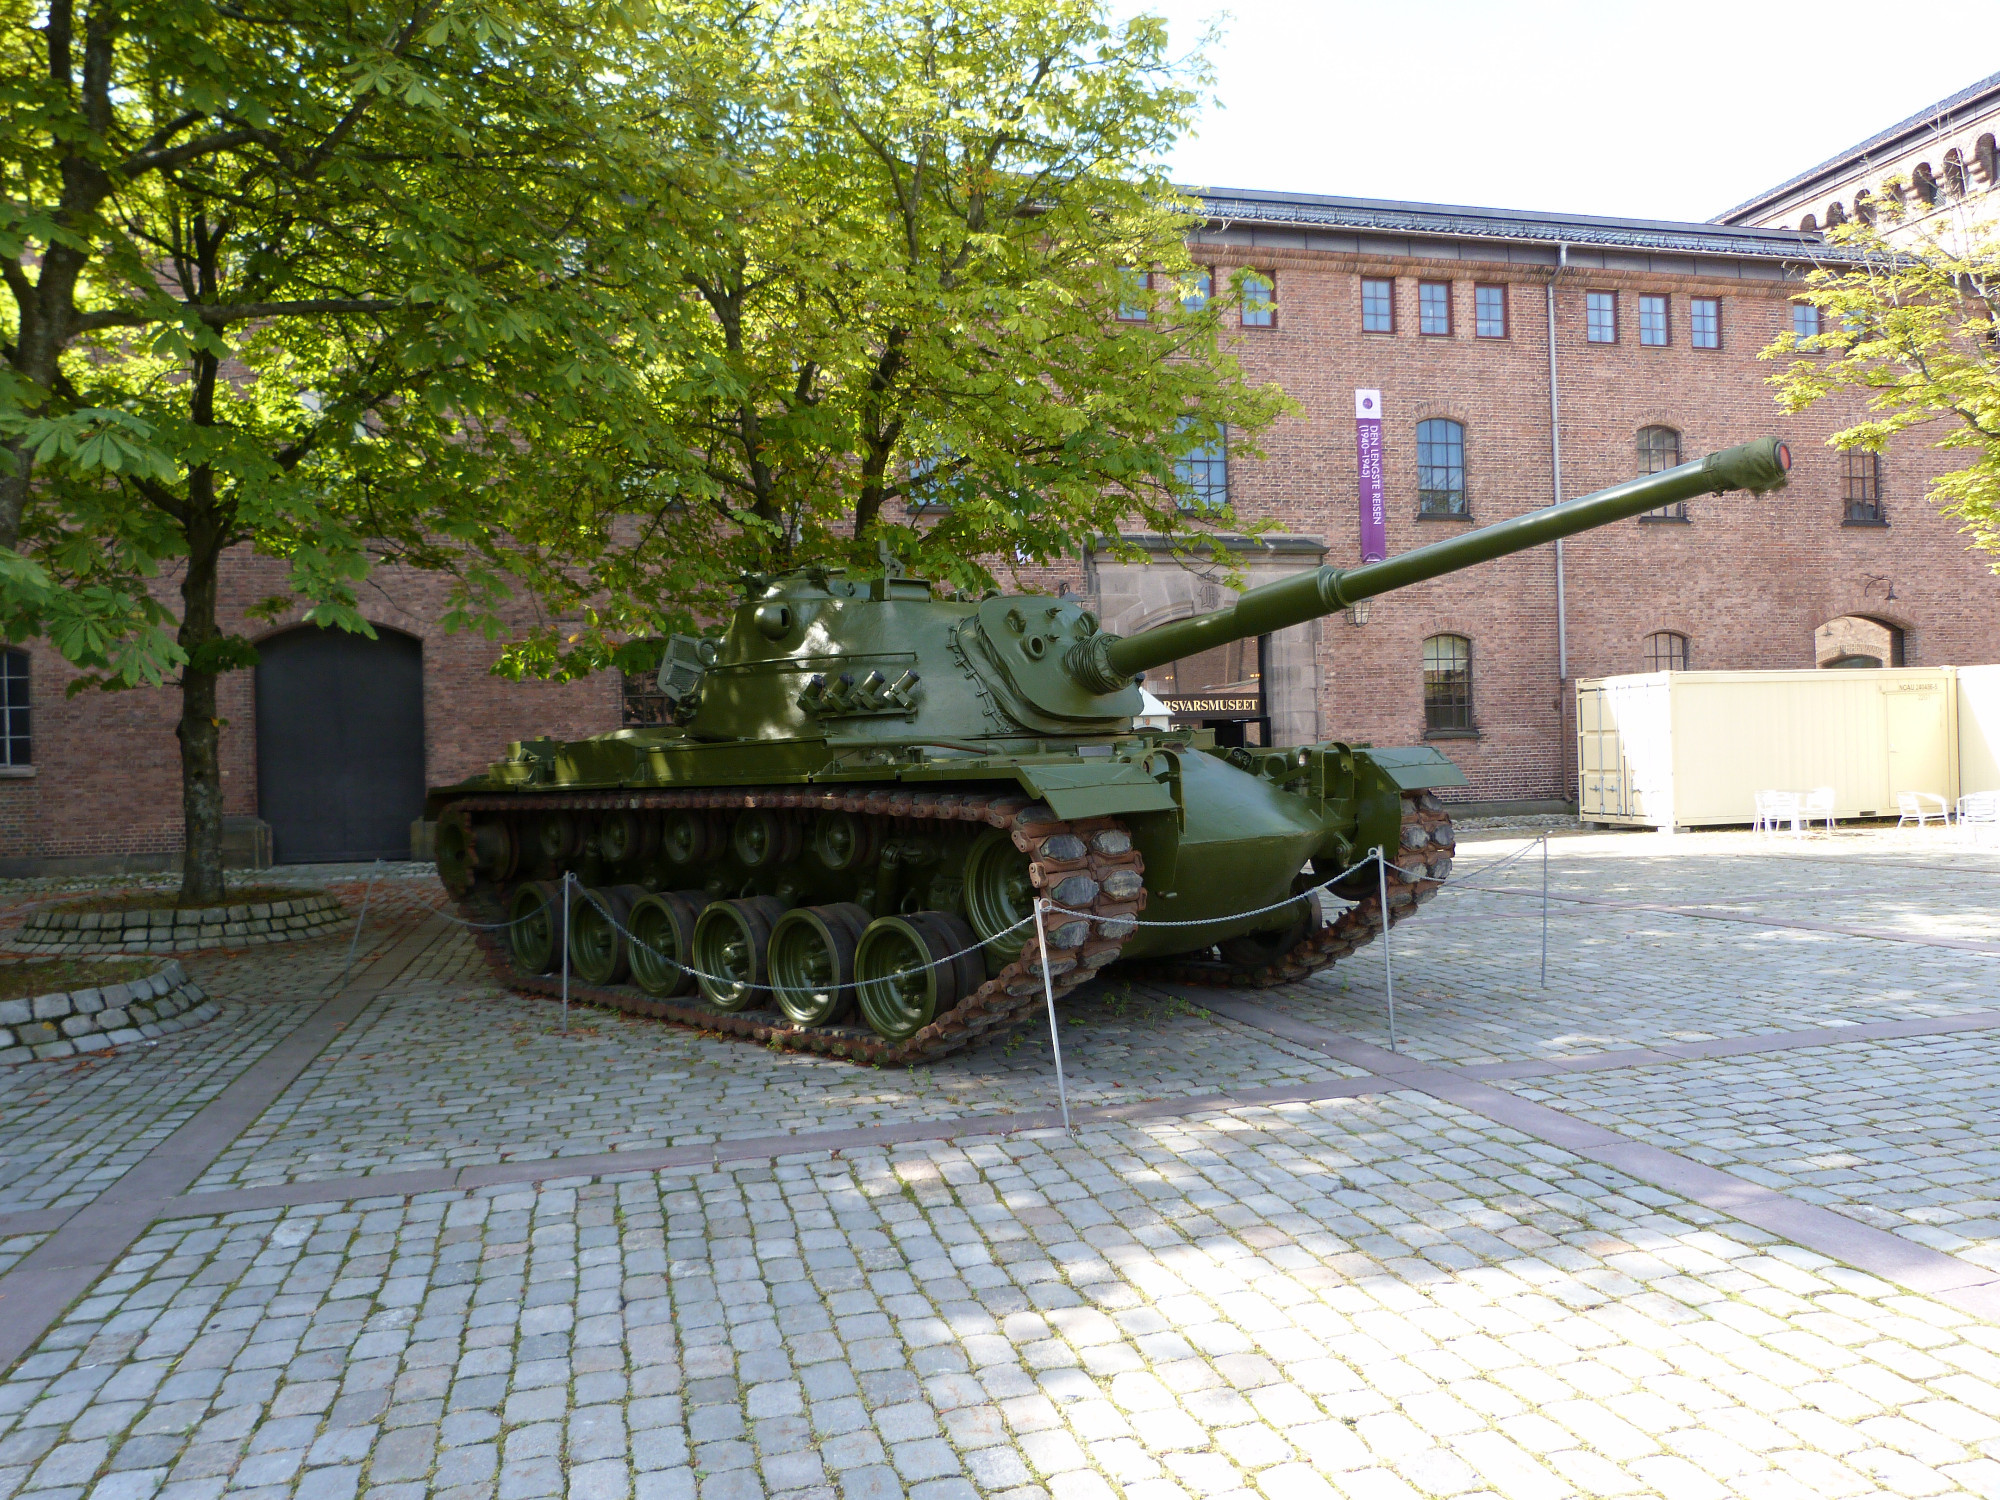 Norweigen Armed Forces Museum